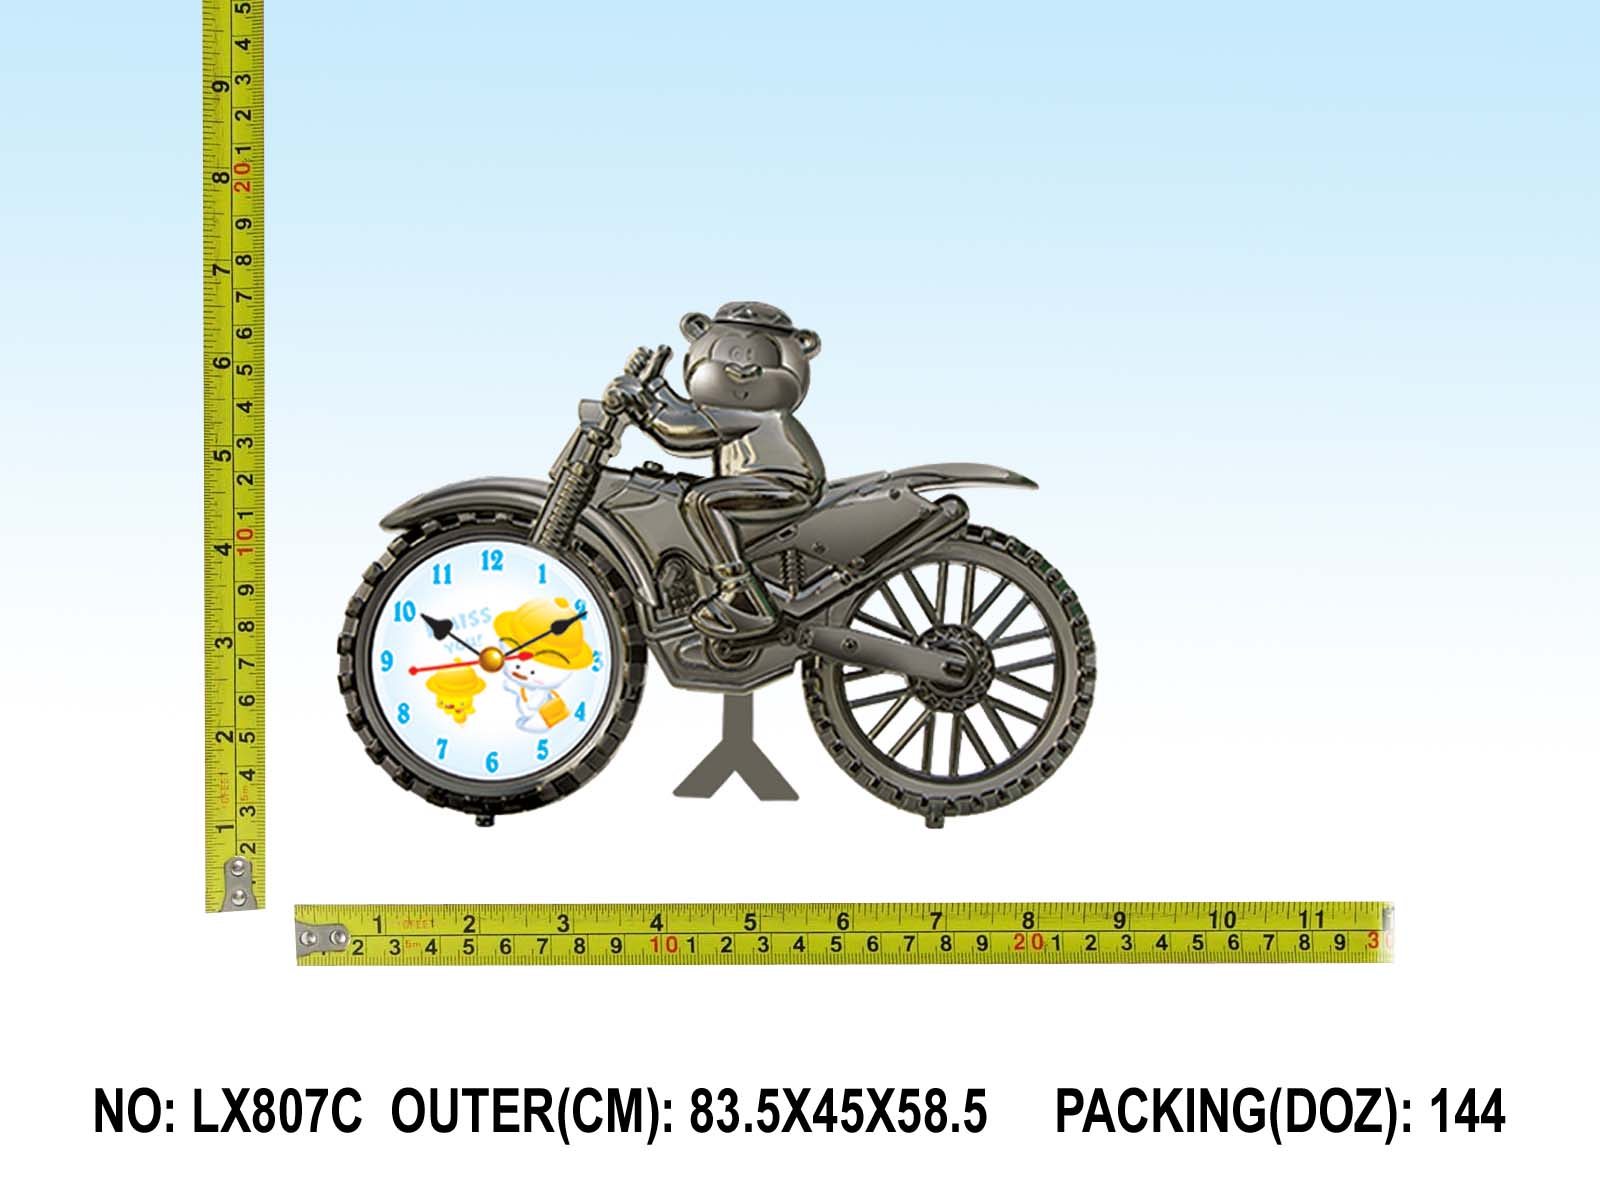 Small bear motorcycle clock